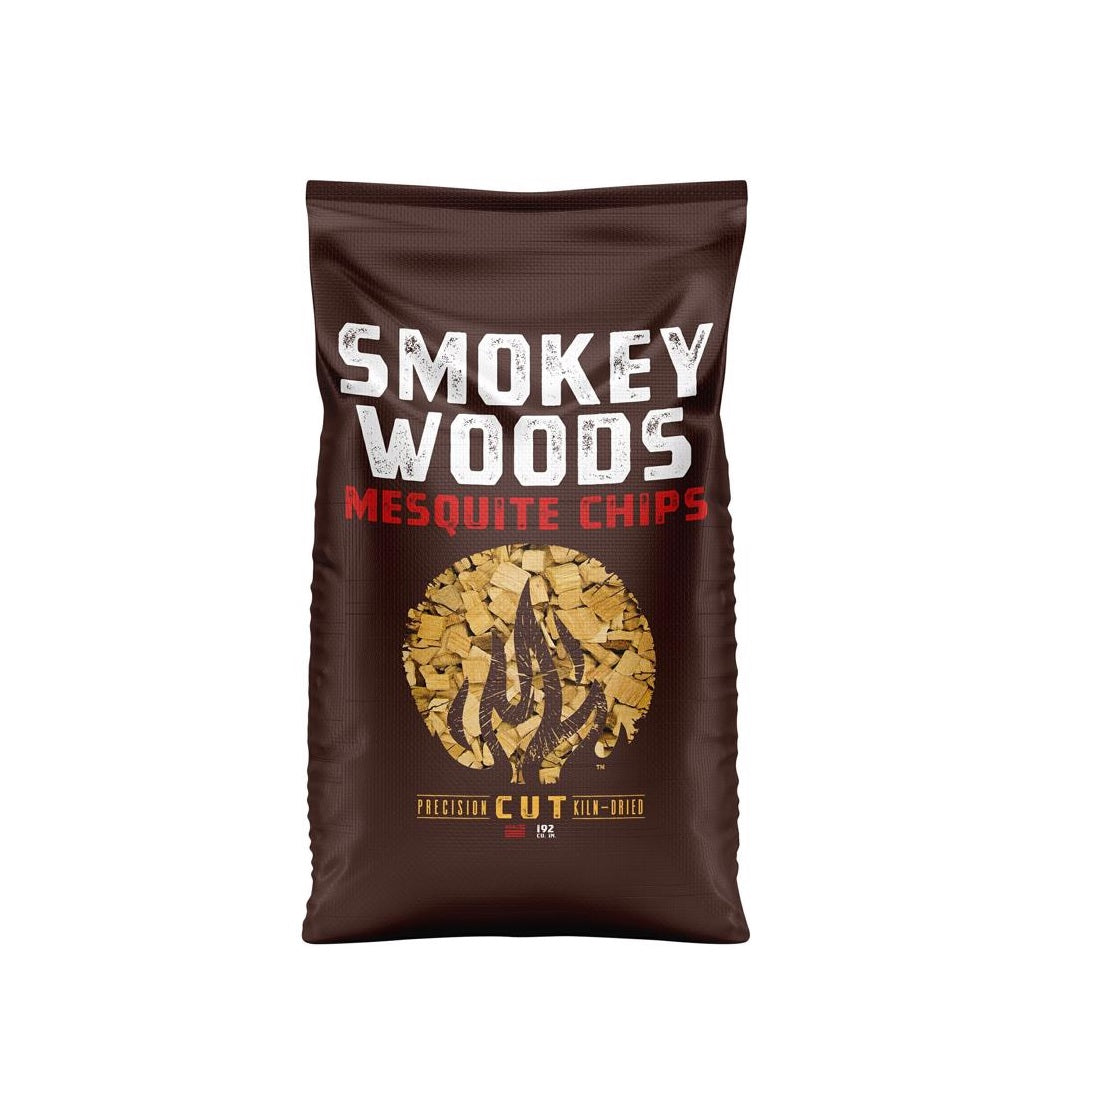 Smokey Woods SW-20-35-192 Mesquite Wood Smoking Chunks, 192 cu in